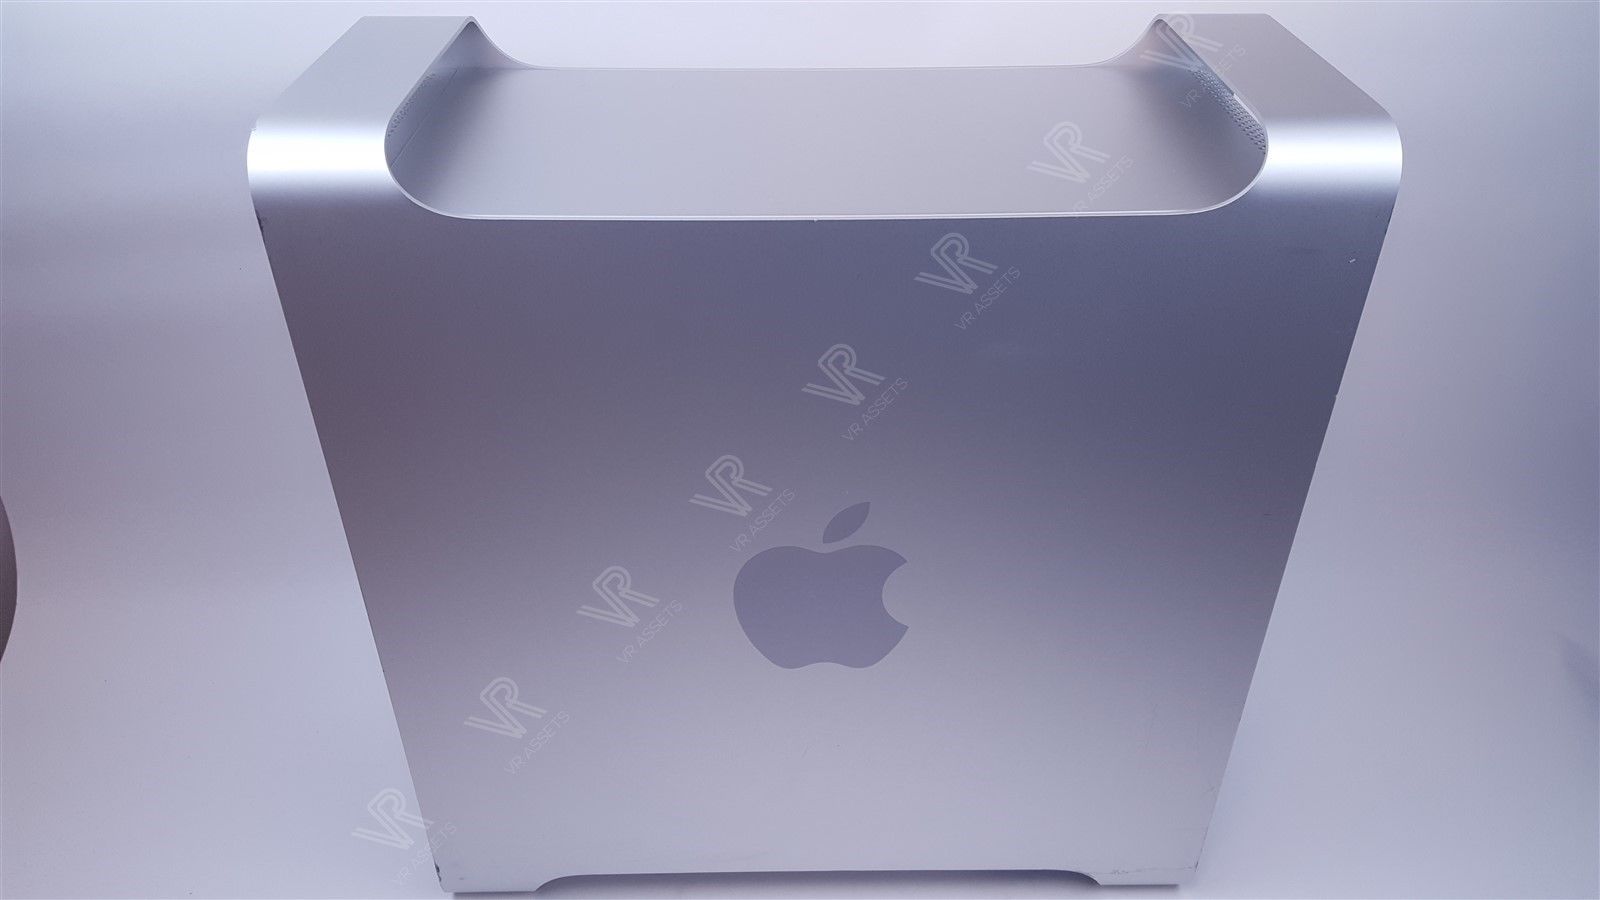 Apple Mac Pro A1289 Mid 2012 12-Core Dual Xeon 2.4GHz 16Gb 1Tb HD 5770 Video